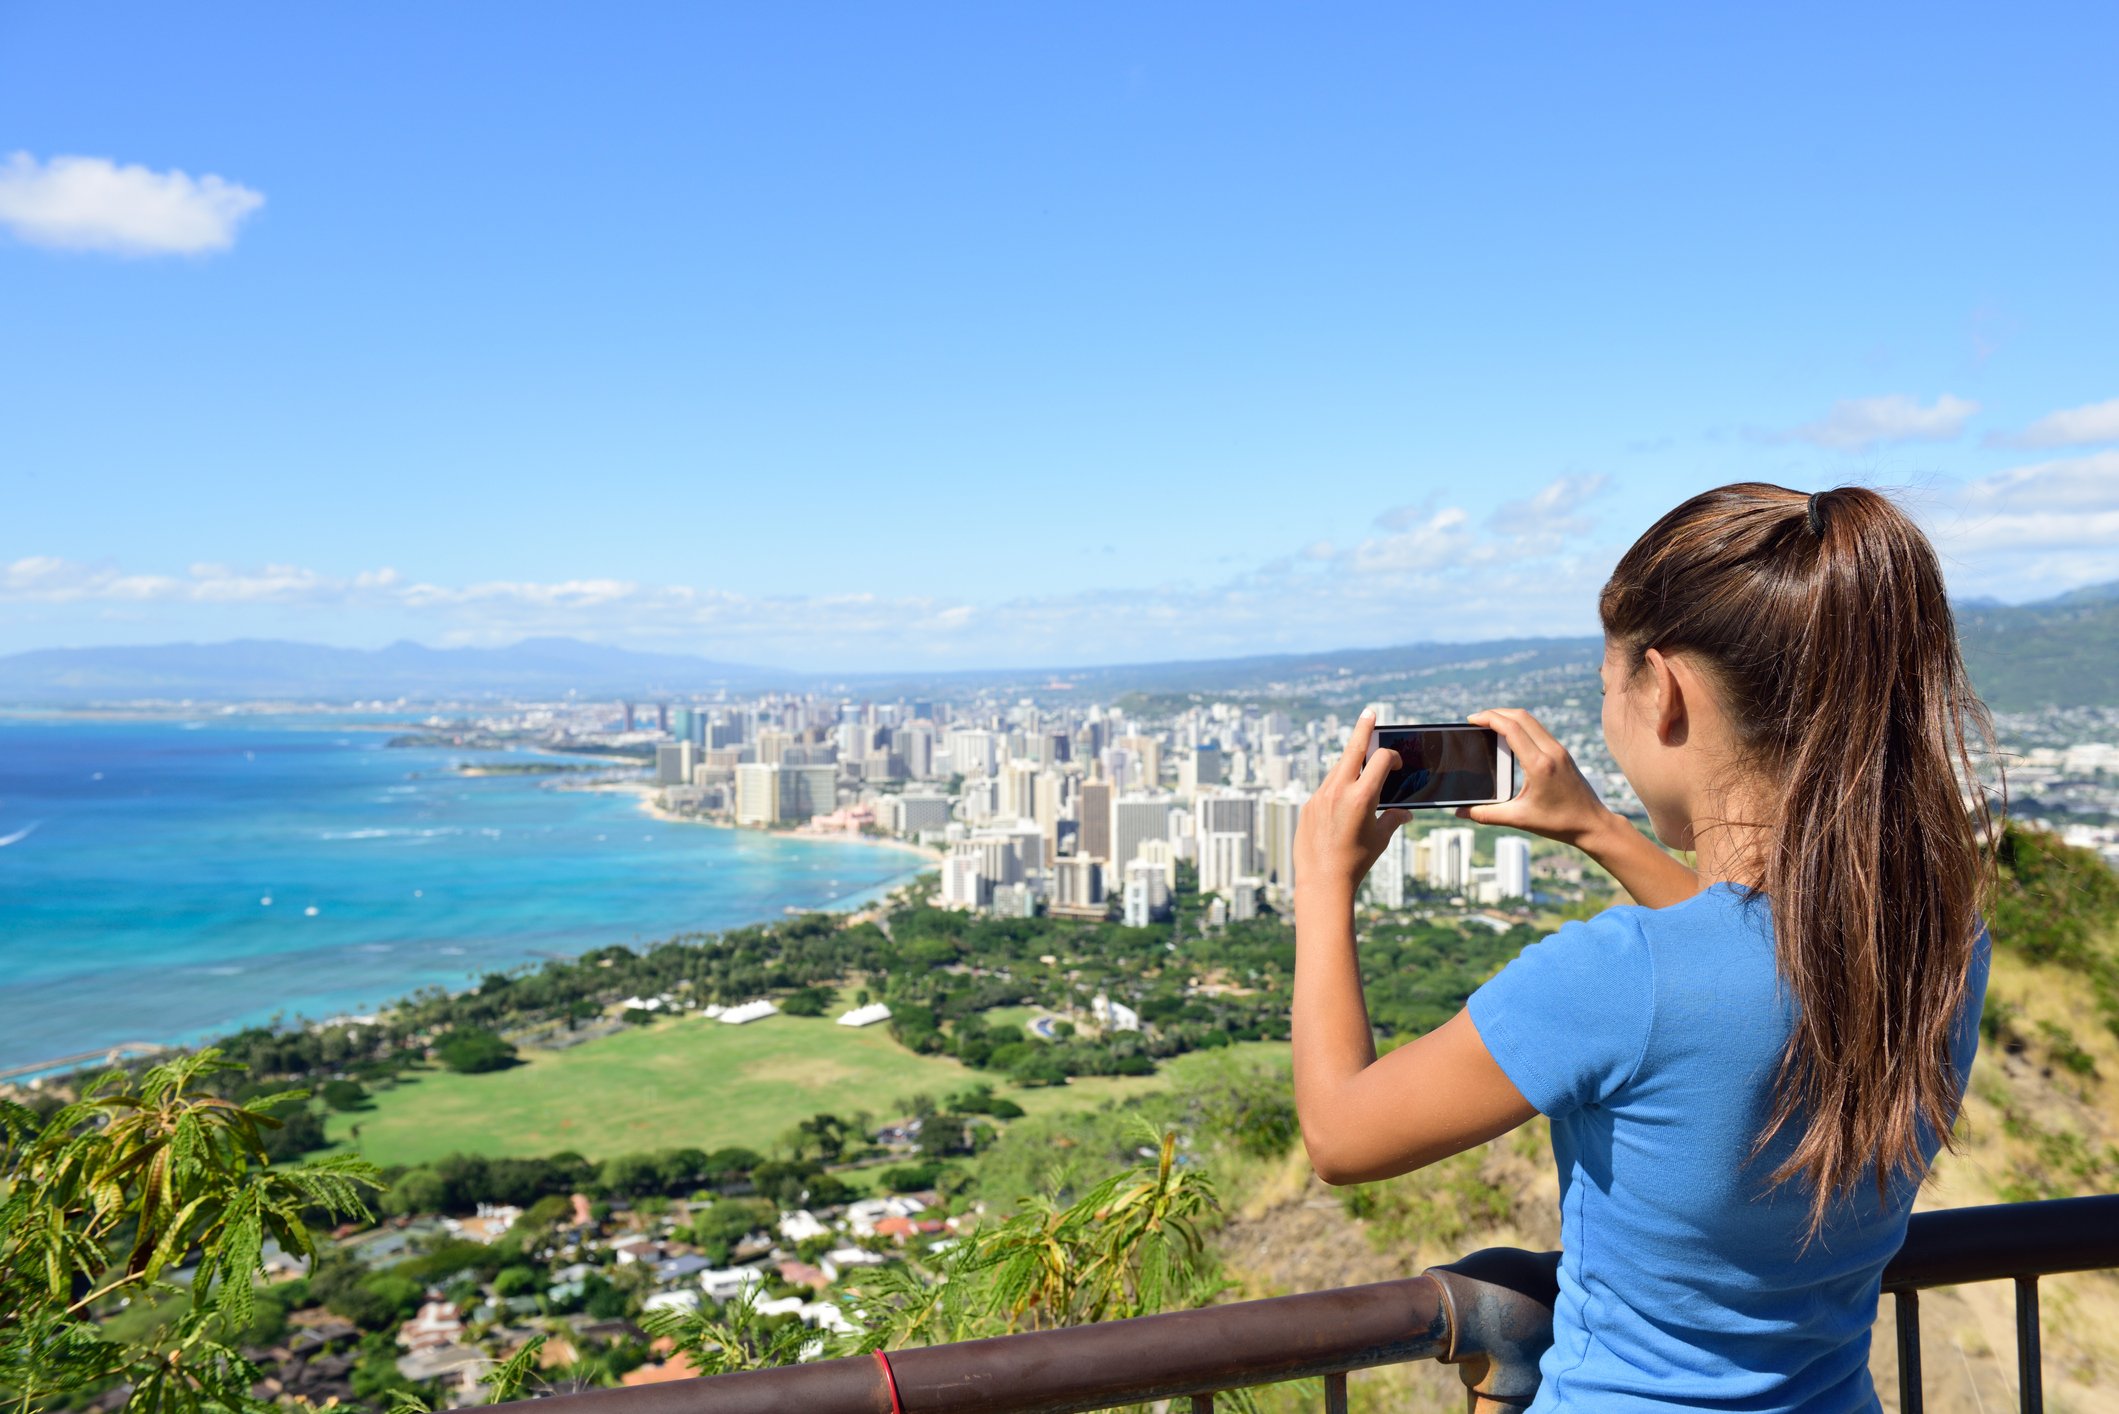 Hawaii tourist taking photo of Honolulu and Waikiki beach using smartphone camera. Woman tourist on hike visiting famous viewpoint lookout in Diamond Head State Monument and park, Oahu, Hawaii, USA.